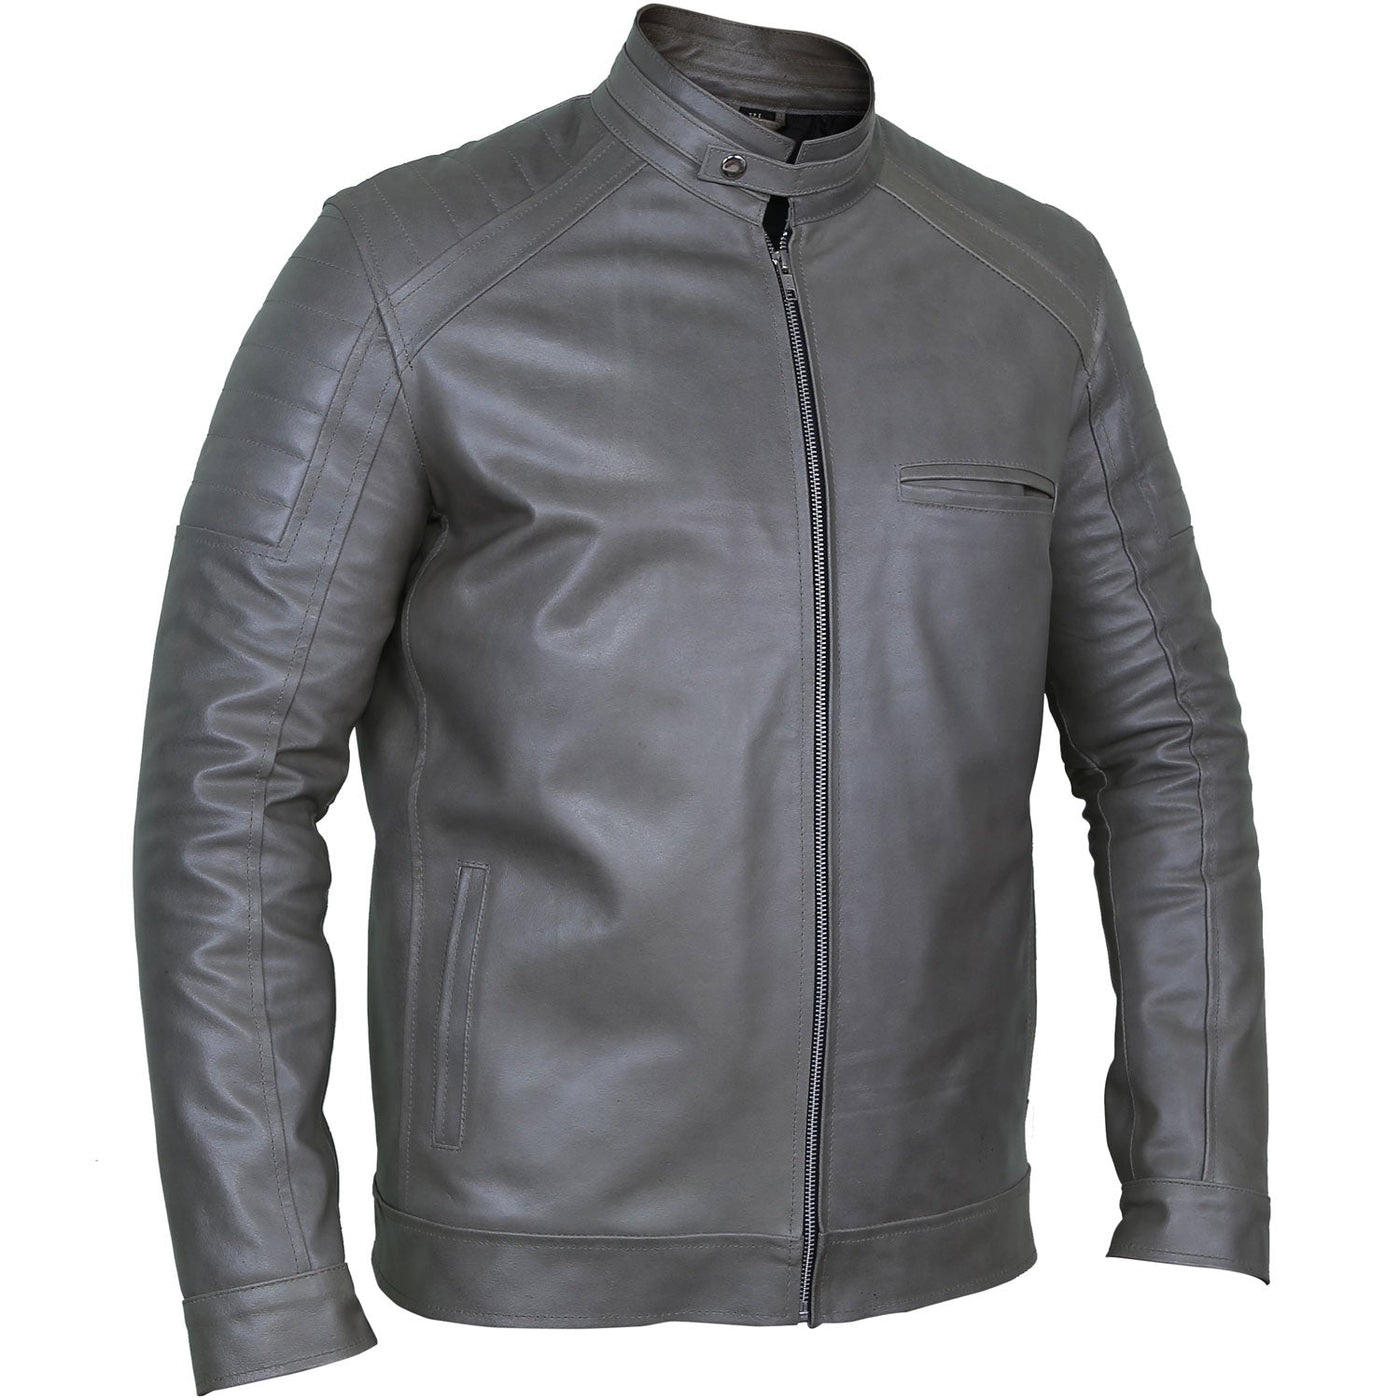 Jackson Grey Leather Biker Jacket Right Side Pose